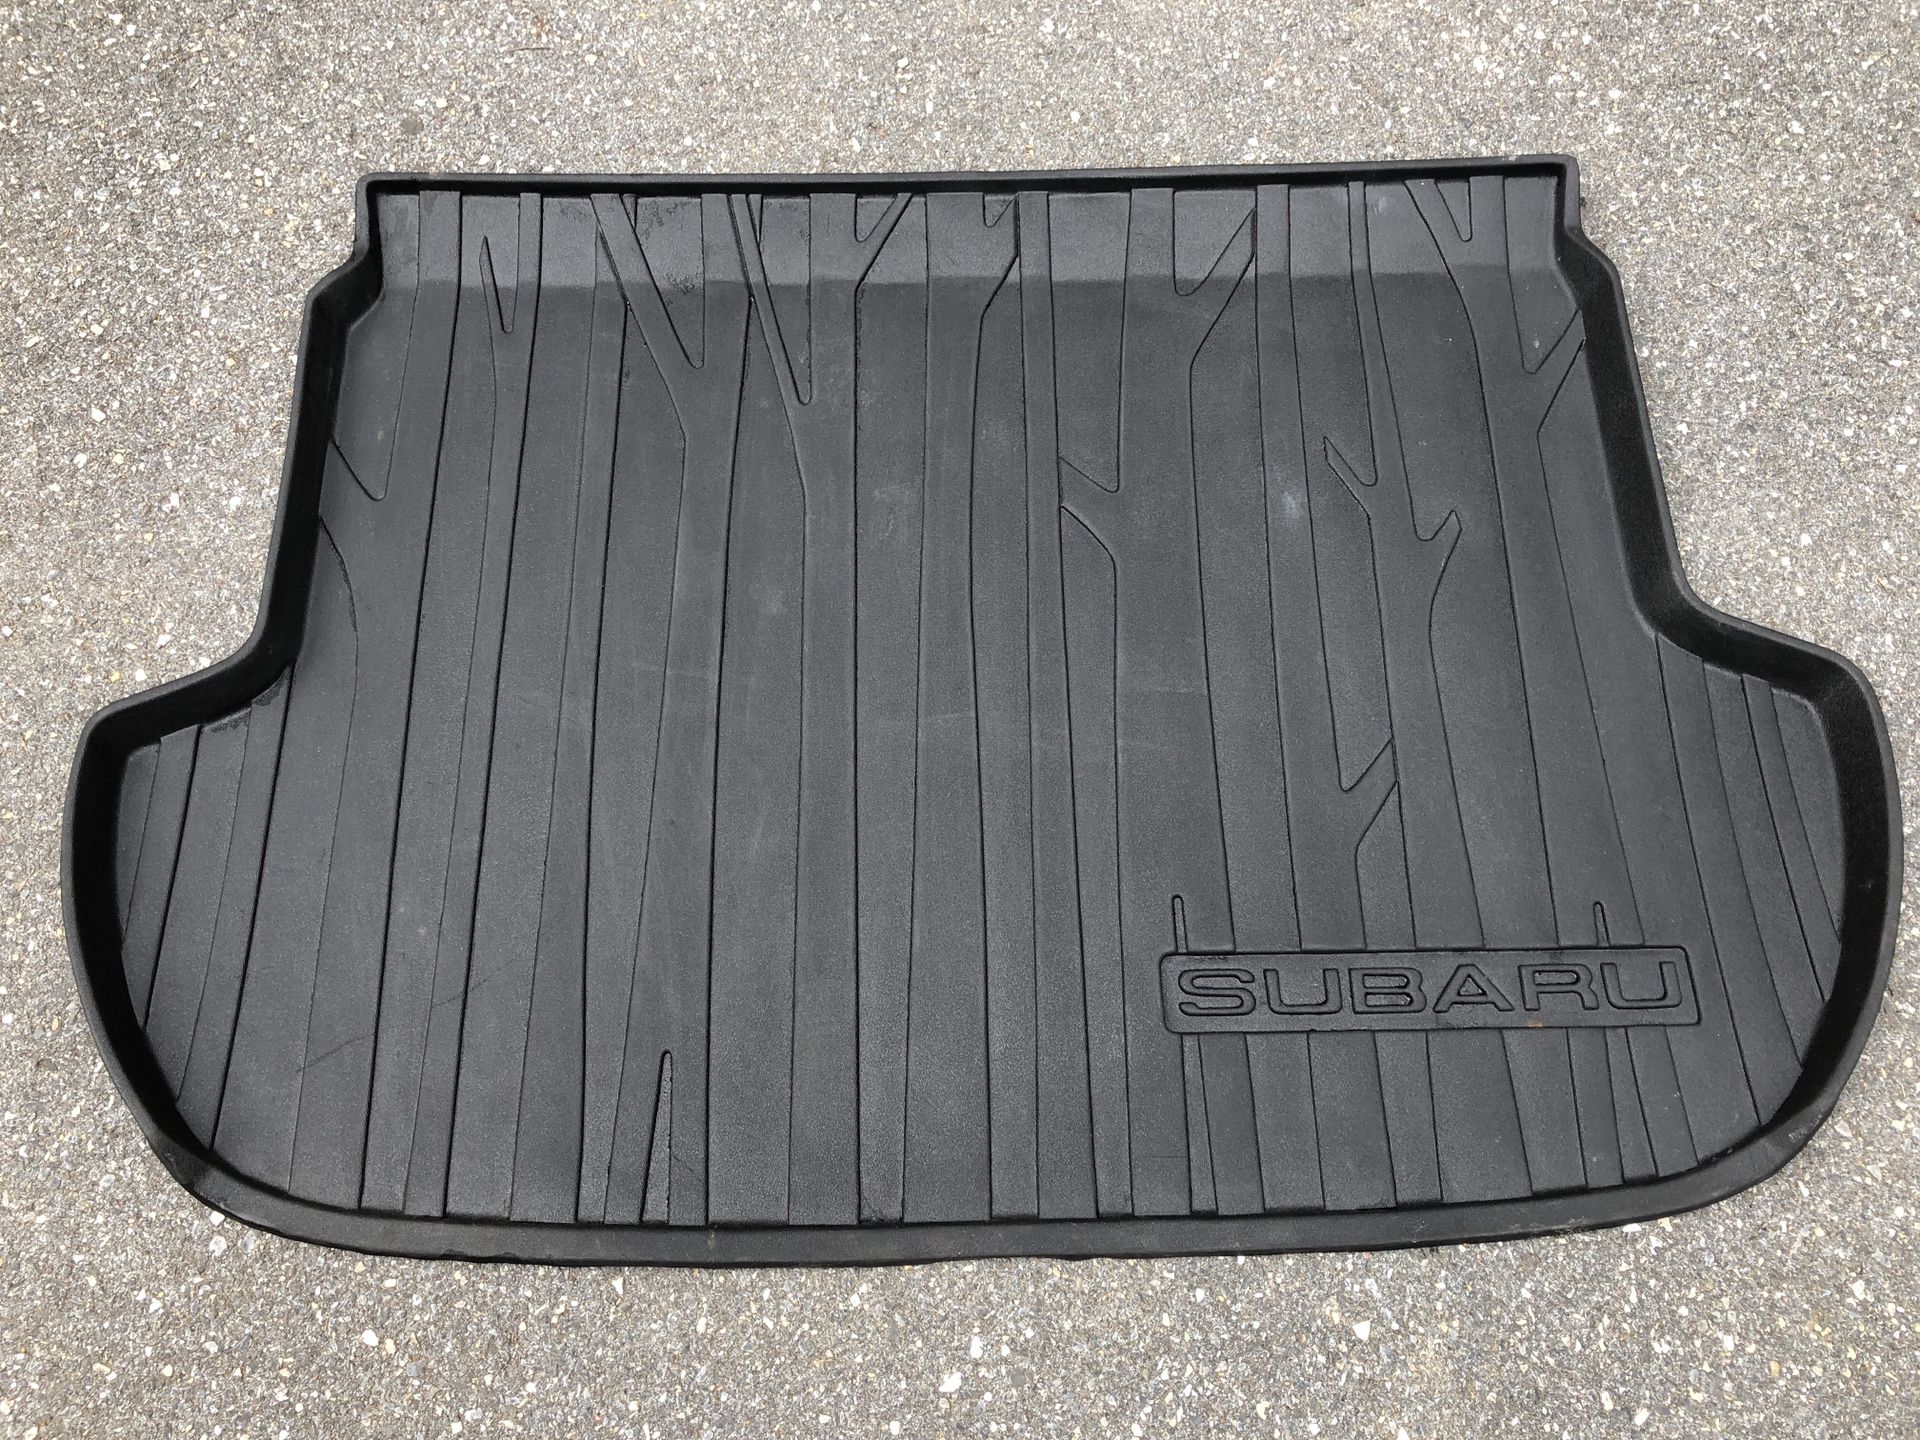 Subaru Forester cargo tray, 2013-18 models (REDUCED)